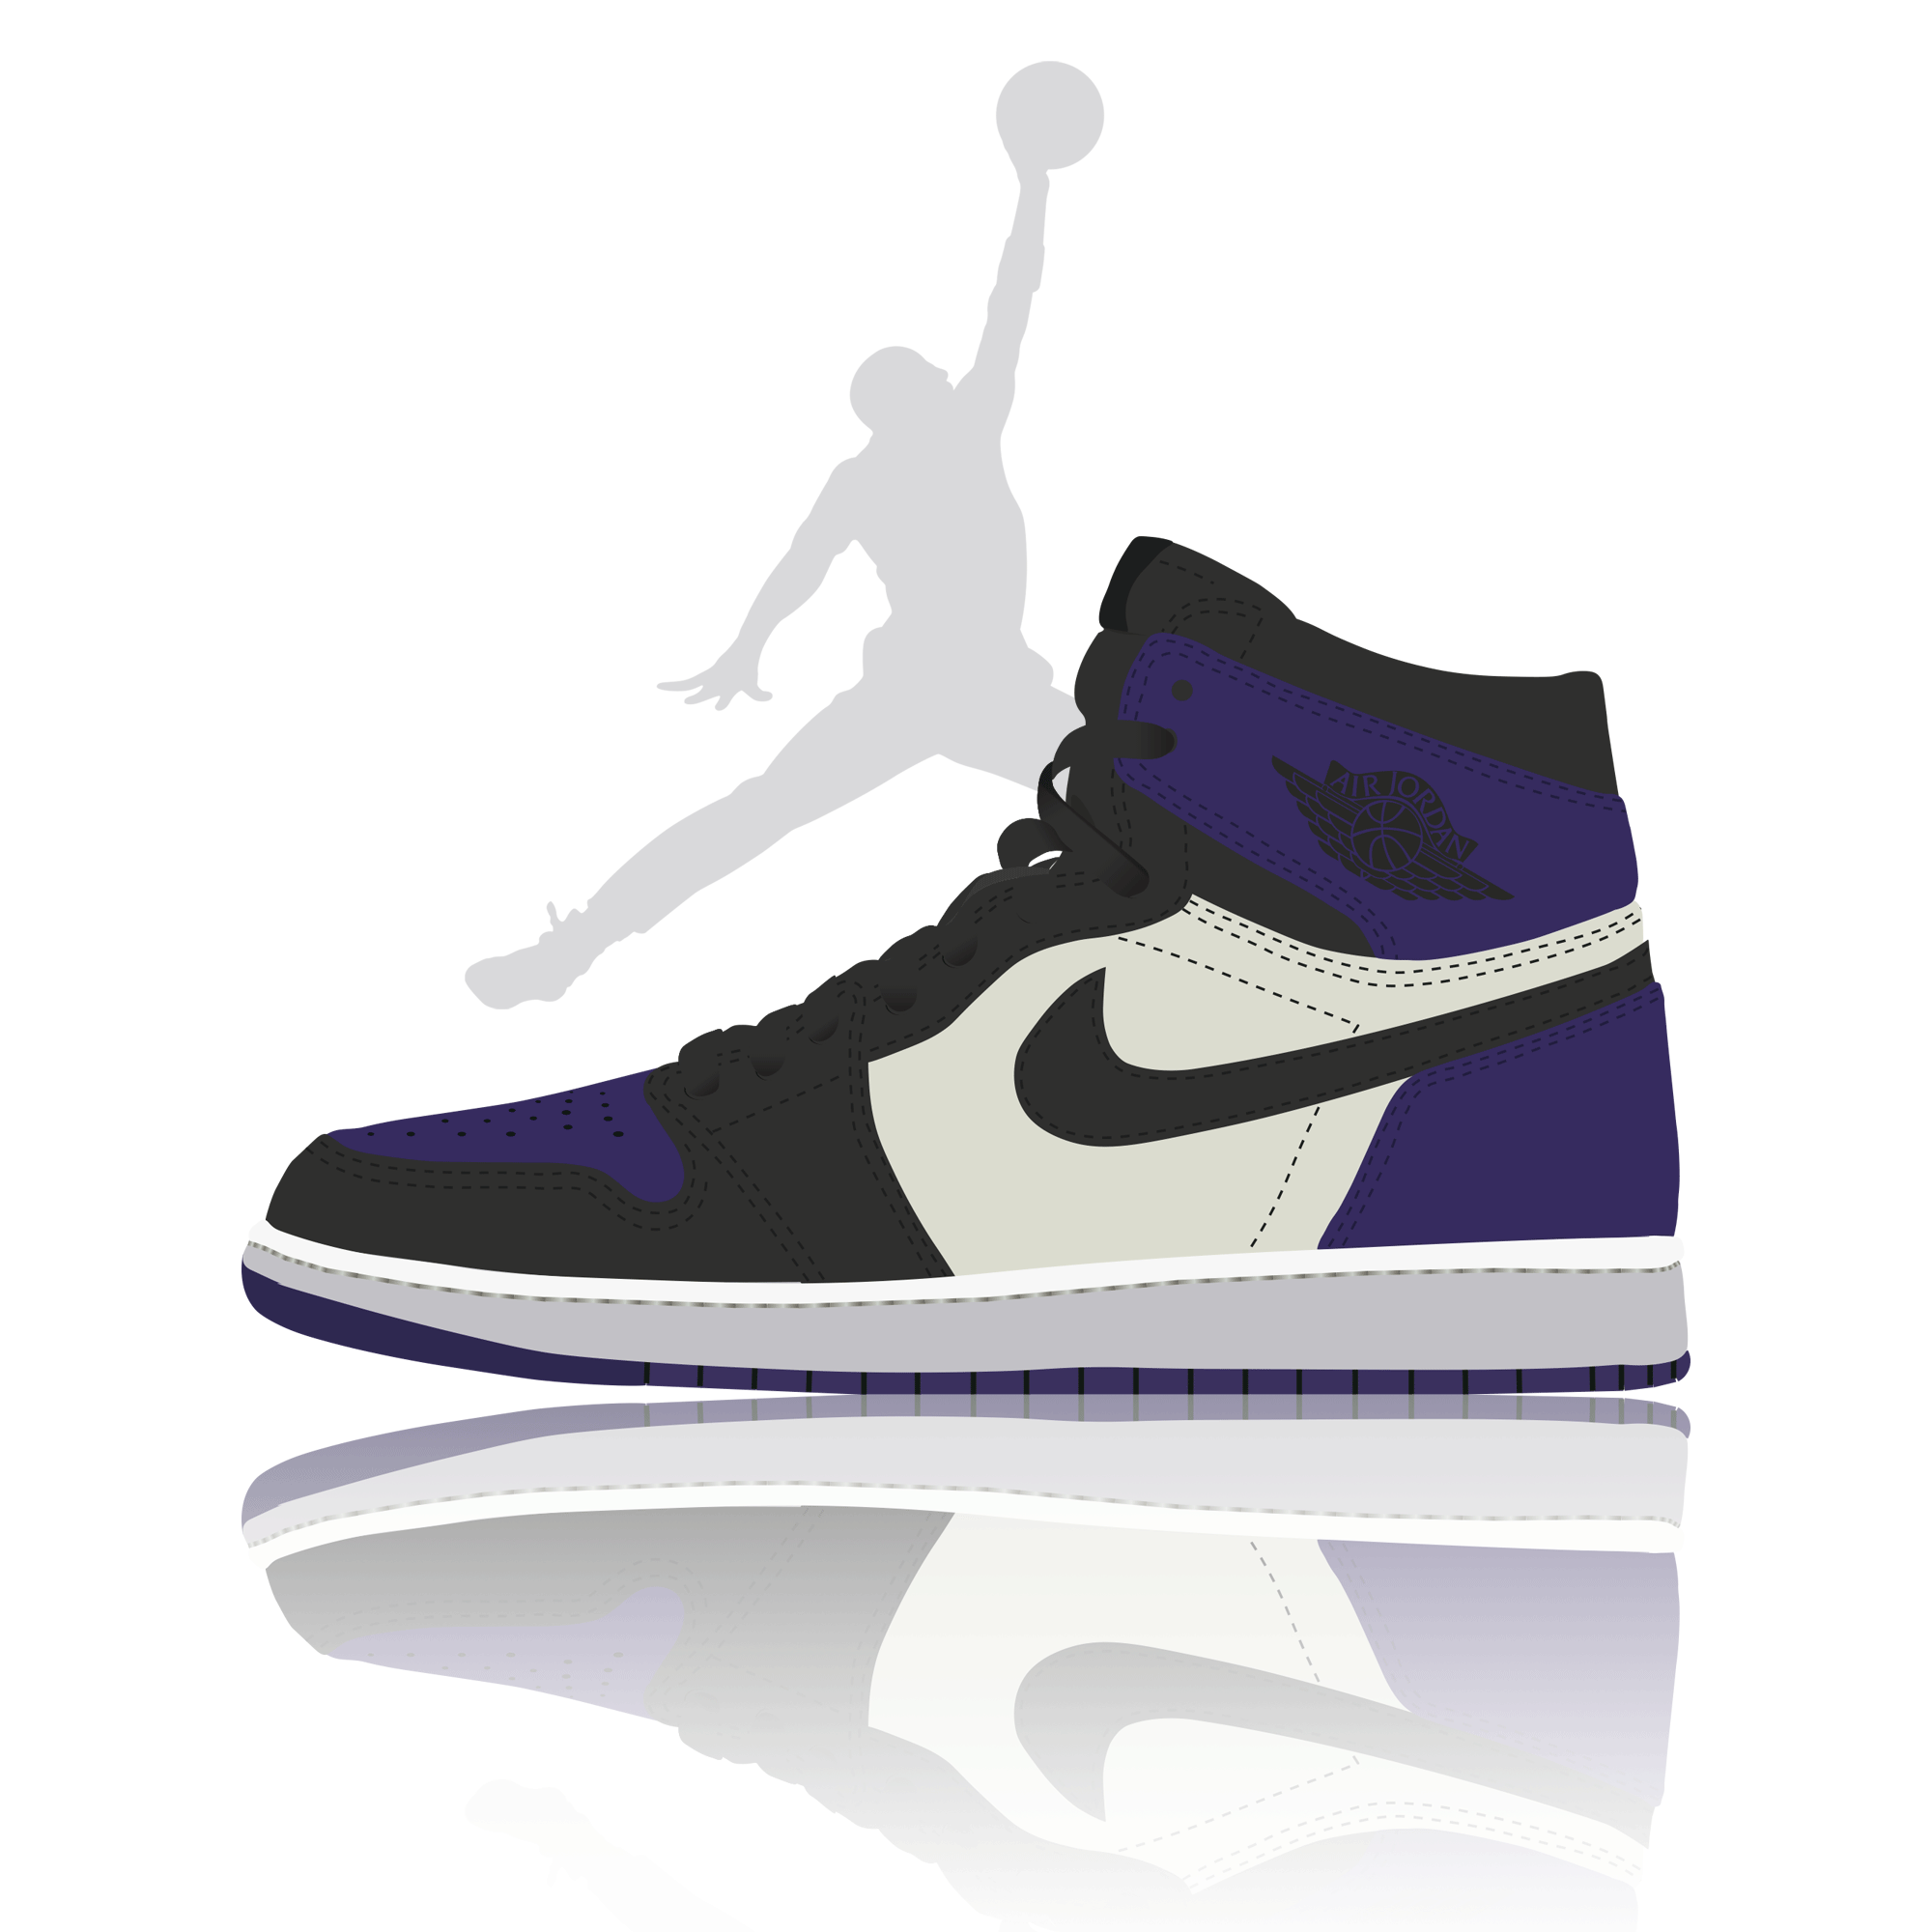 Jordan 1 Court Purple Light Reflection